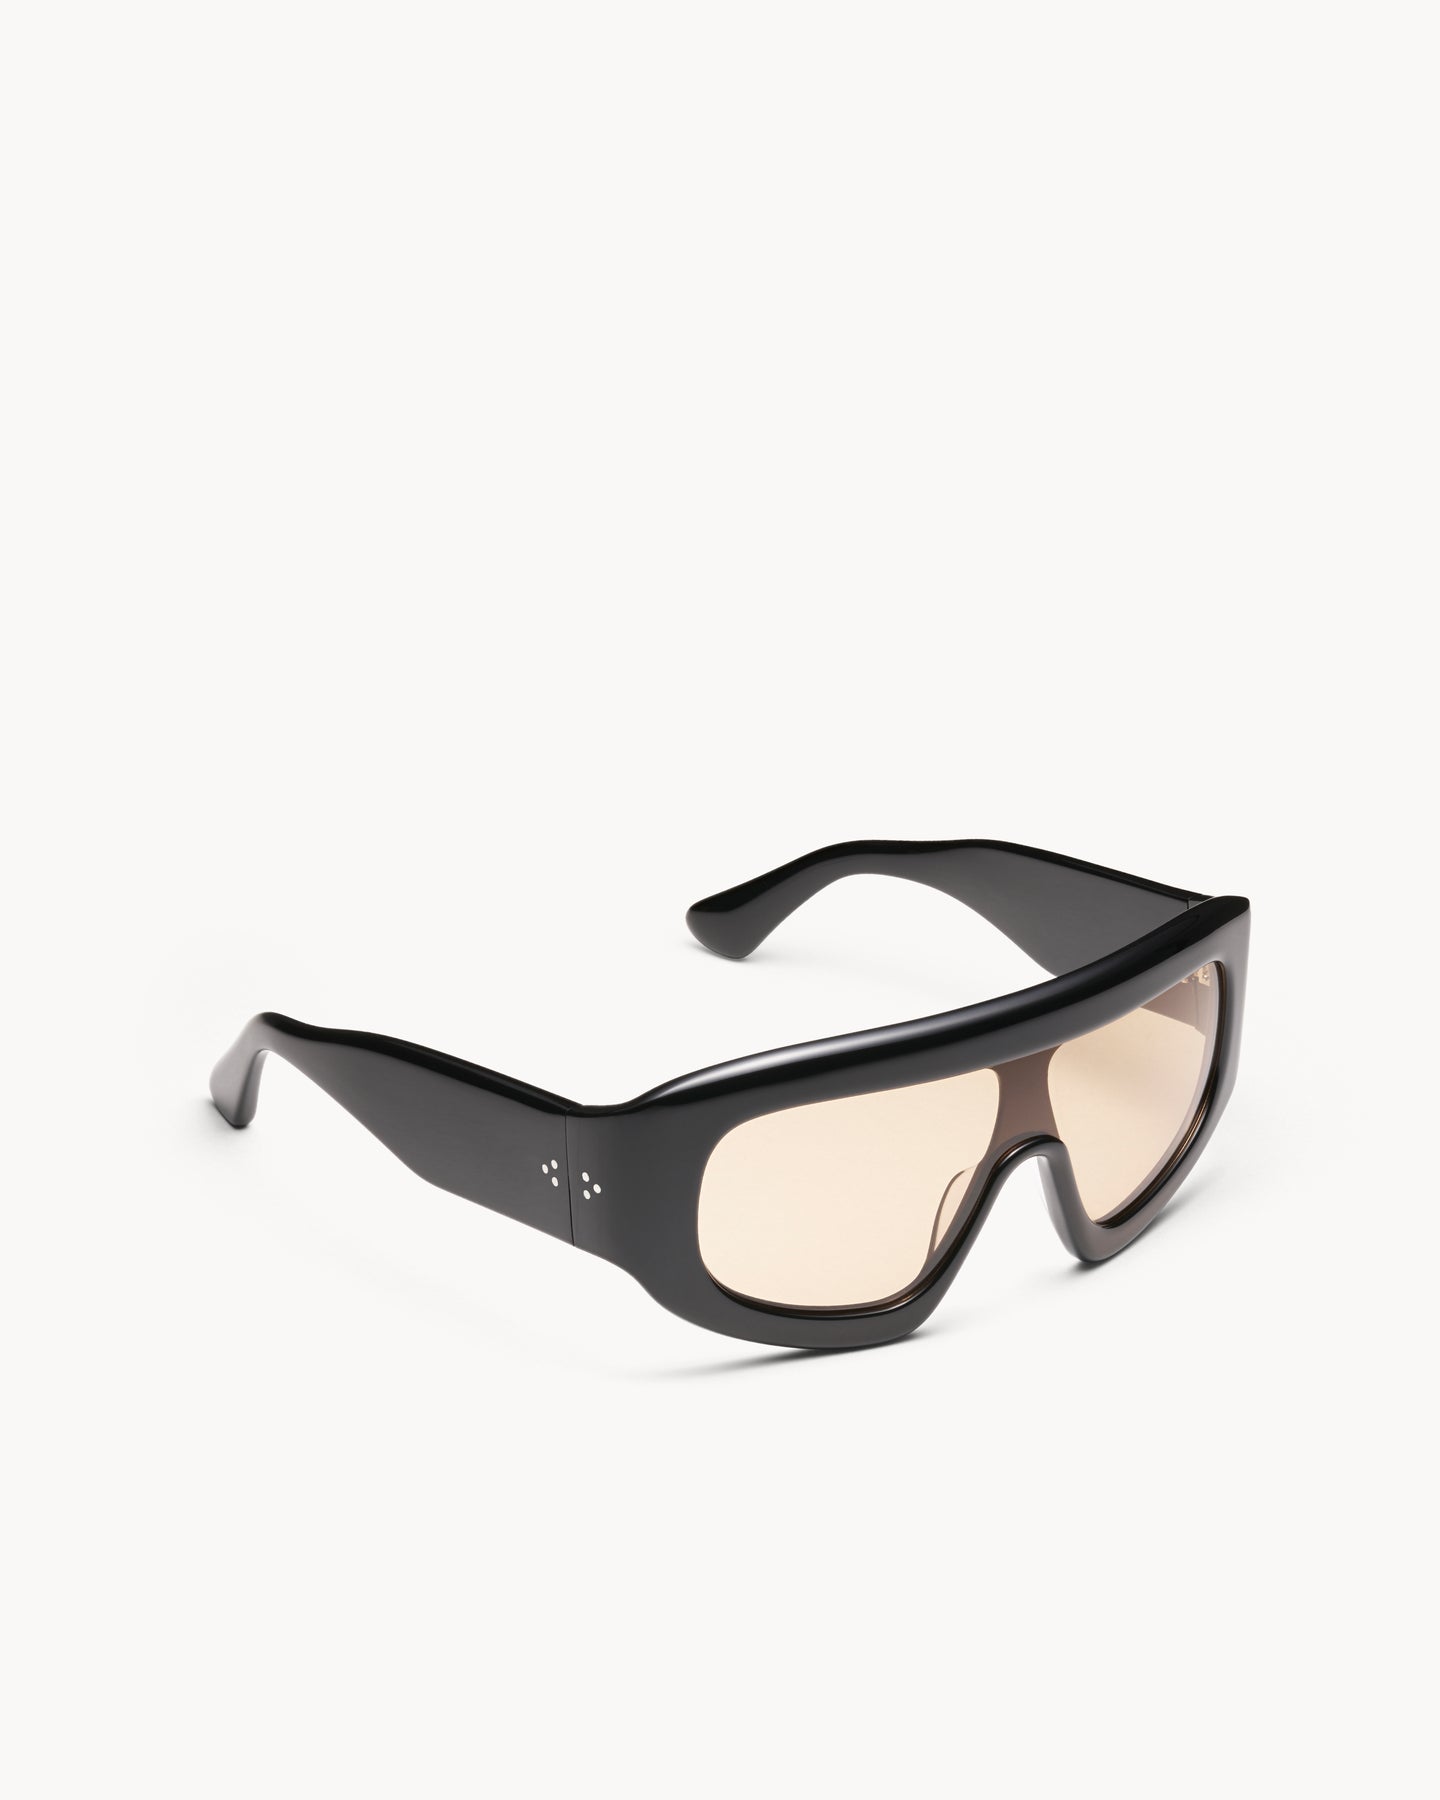 Port Tanger Saraa Sunglasses in Black Acetate and Amber Lenses 2